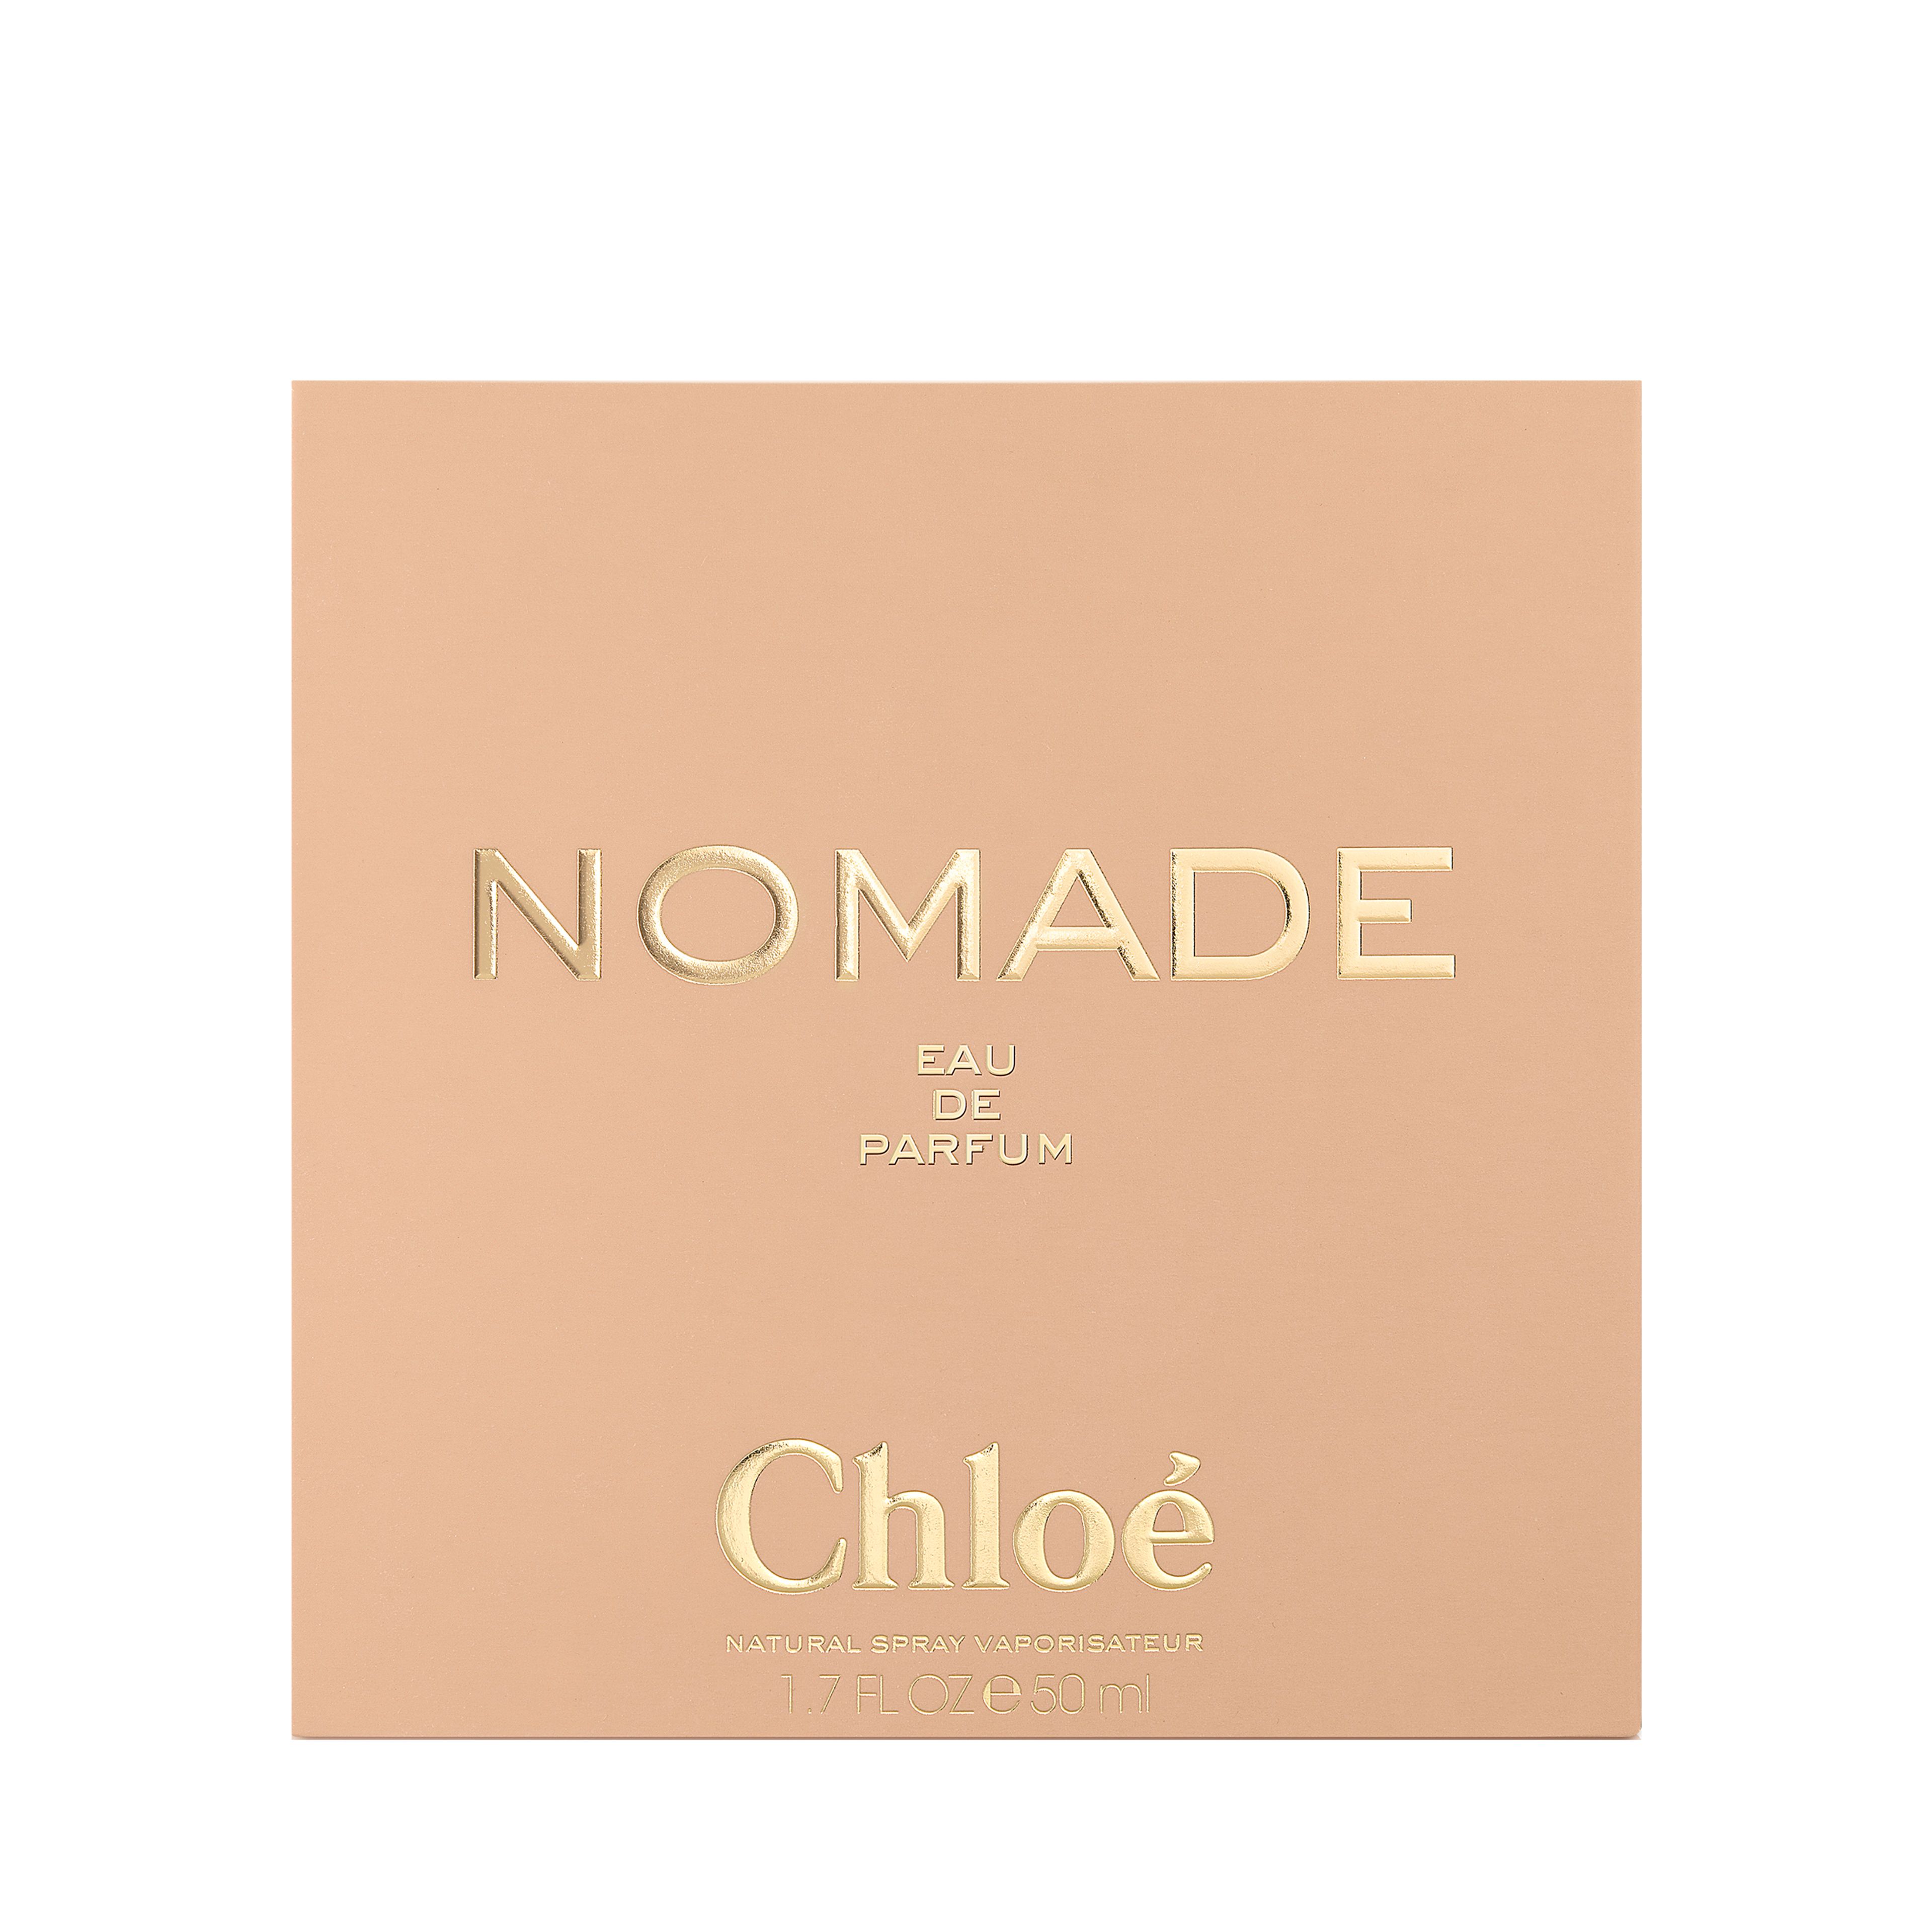 Chloé Nomade Eau De Parfum Chloé 3